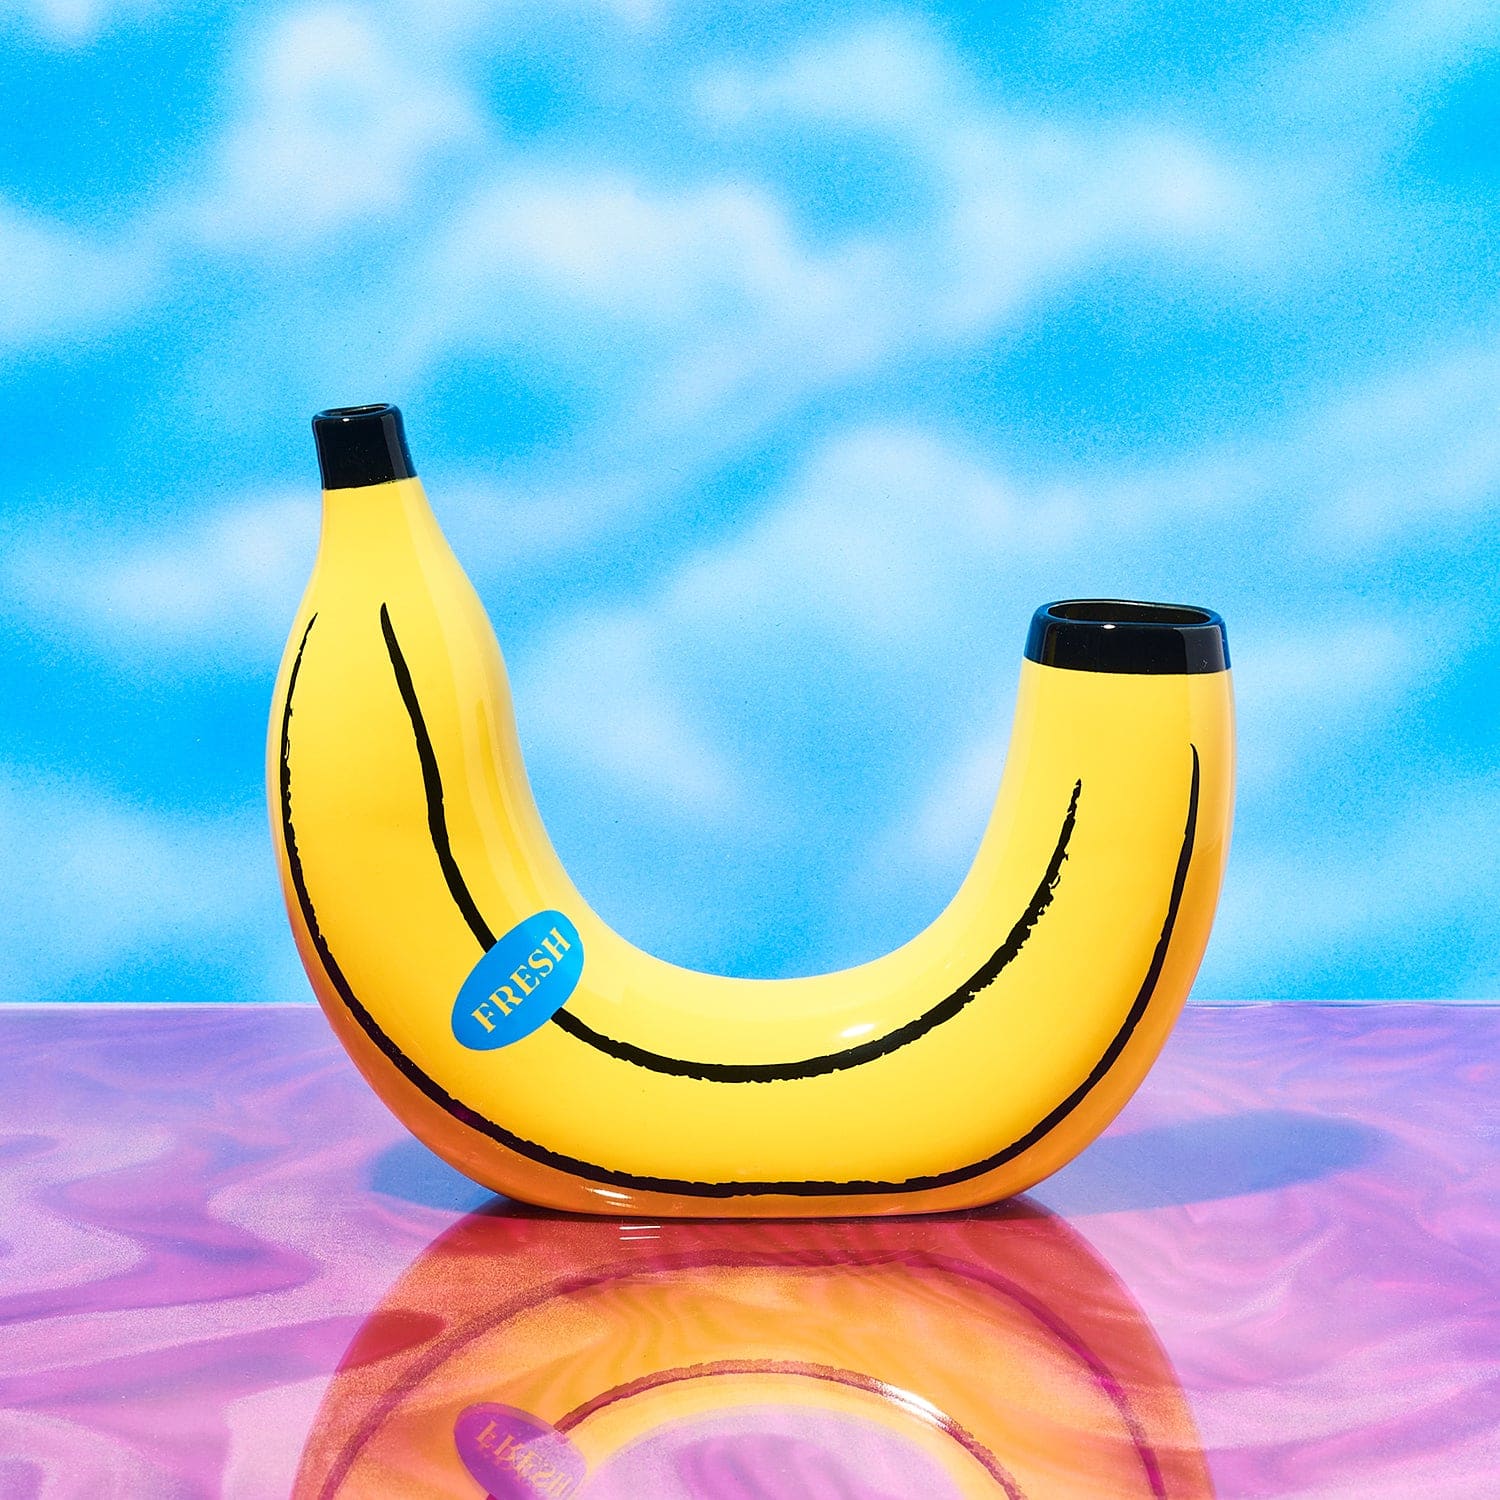 Banana Fruit Vase Banana - Conversation Starters - Gifts